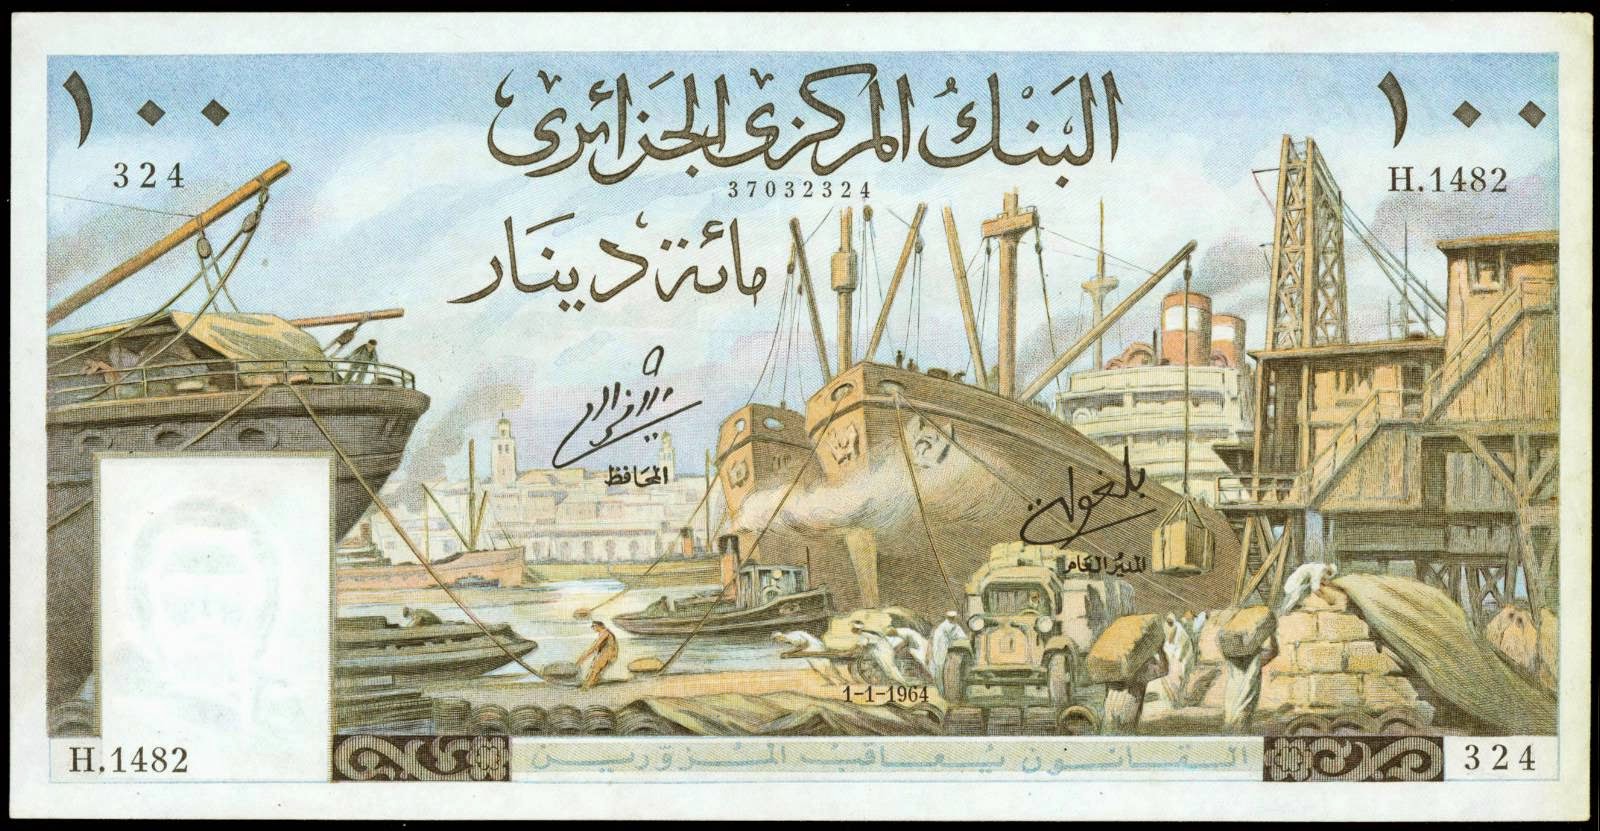 Algeria currency 100 Dinars banknote 1964